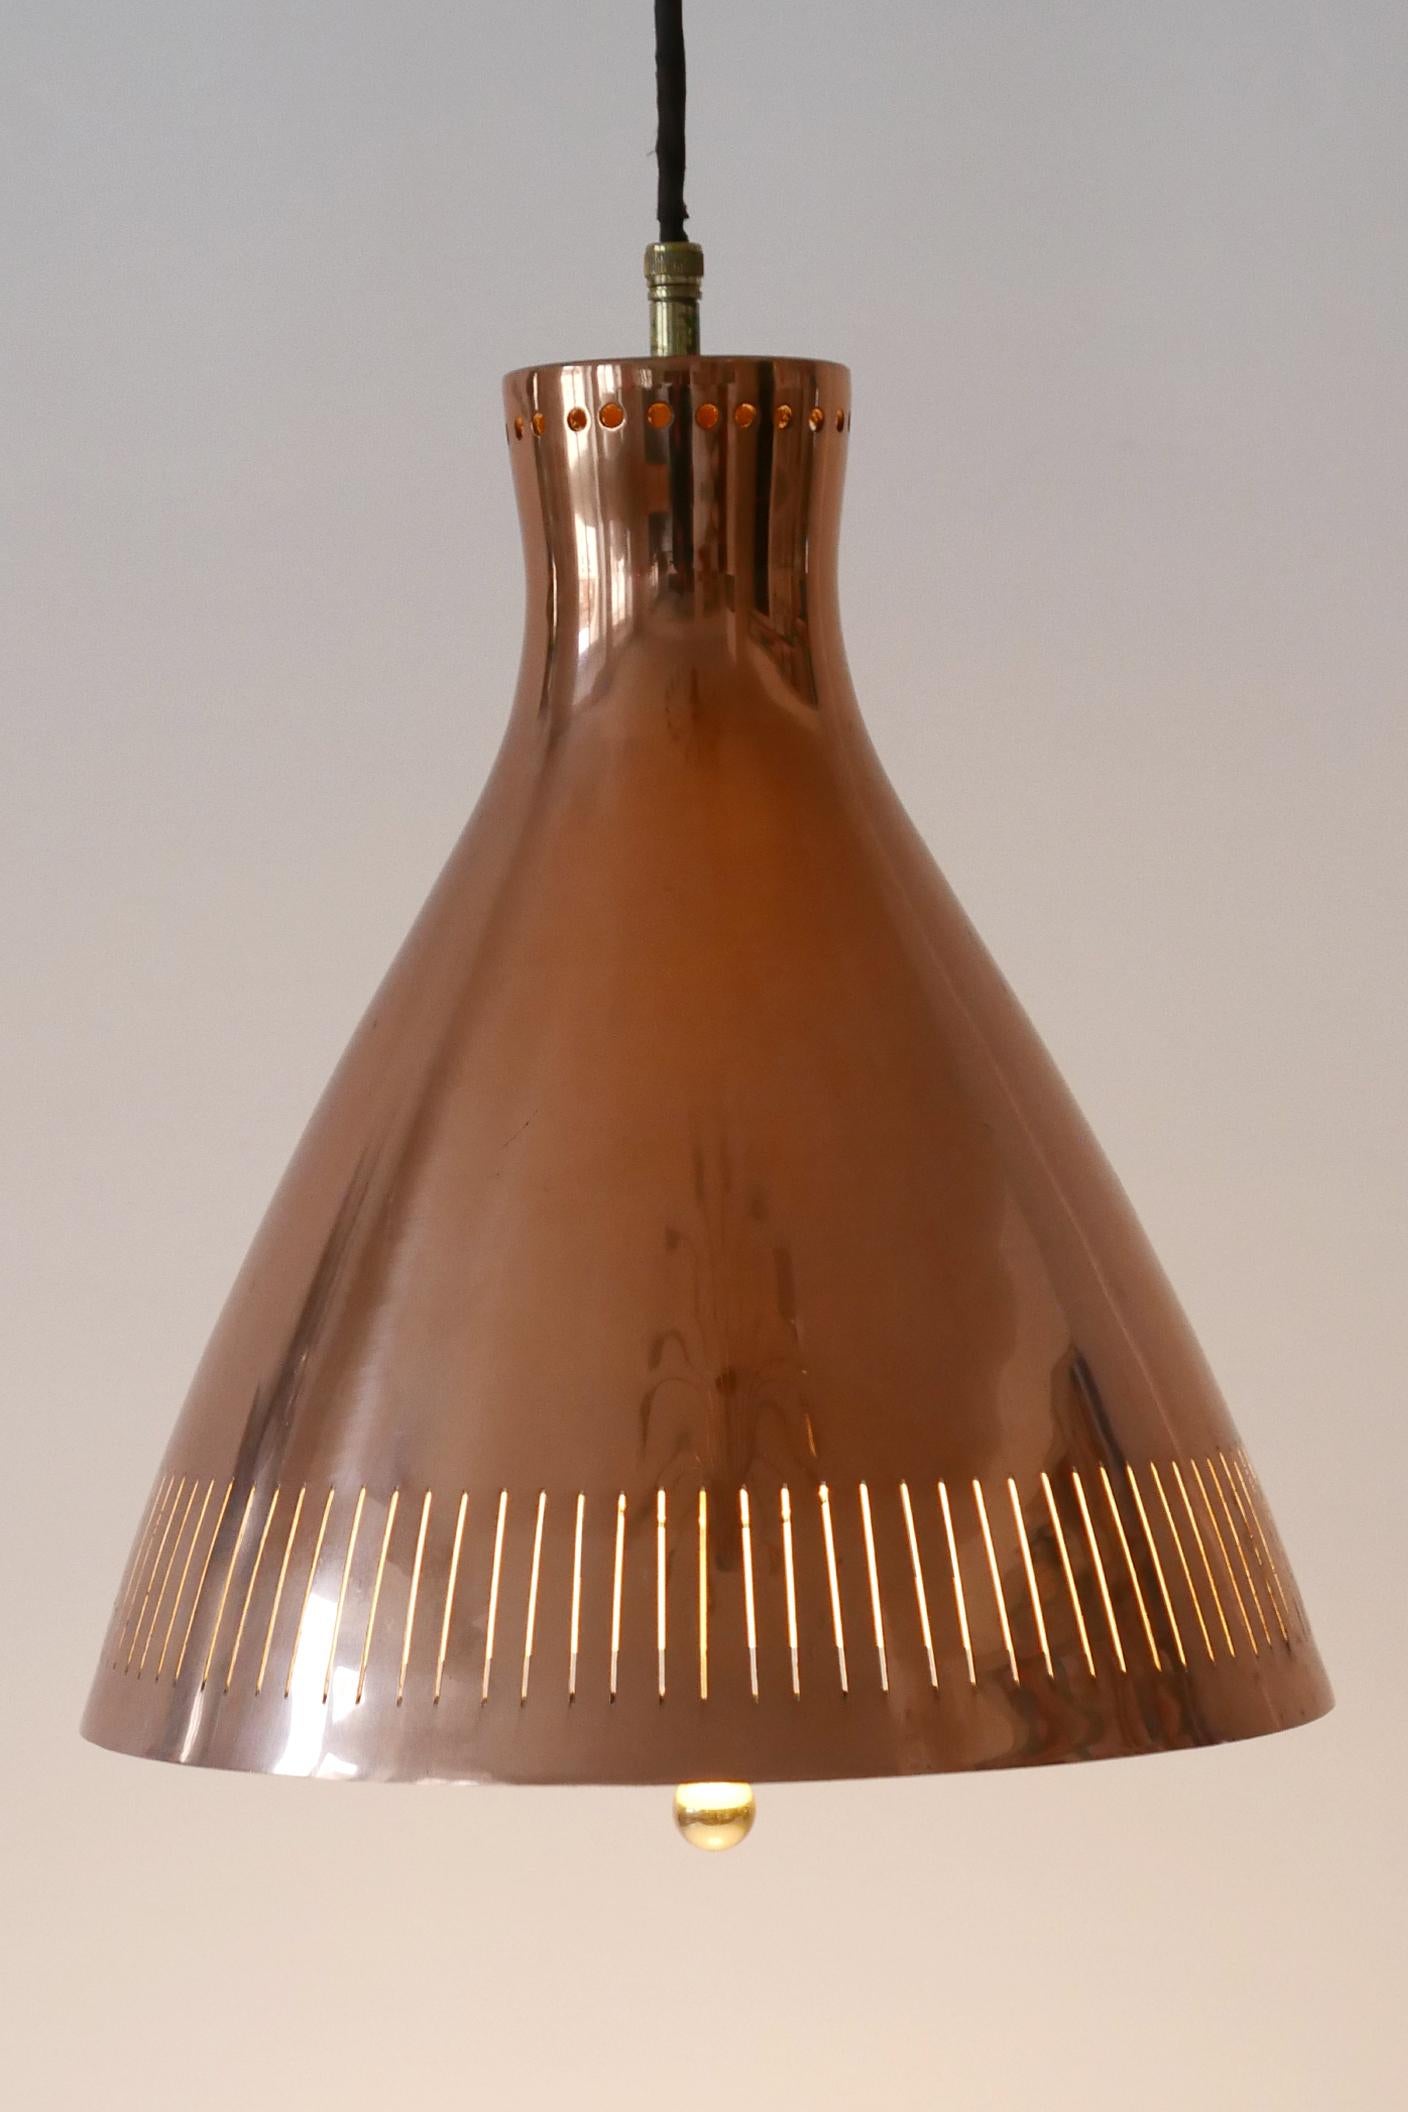 Mid-Century Modern Copper Pendant Lamp by Vereinigte Werkstätten 1960s Germany For Sale 2